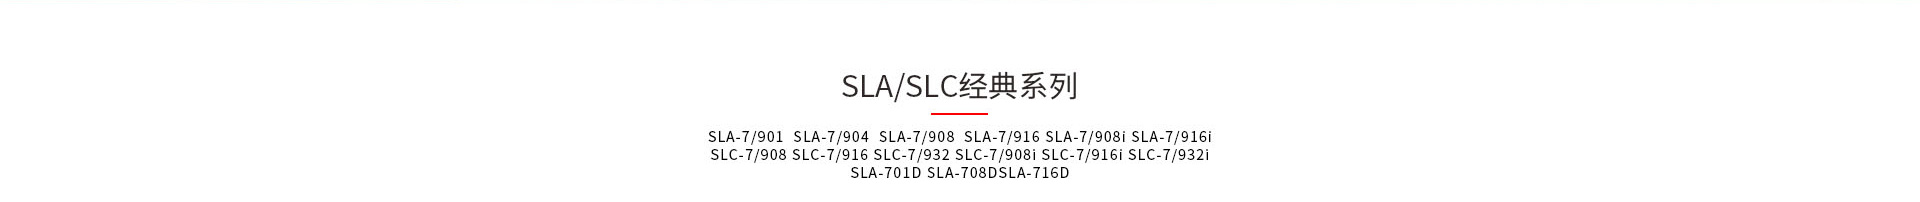 sla和slc系列产品包含vga口和网口kvm支持ip远程产品型号大全